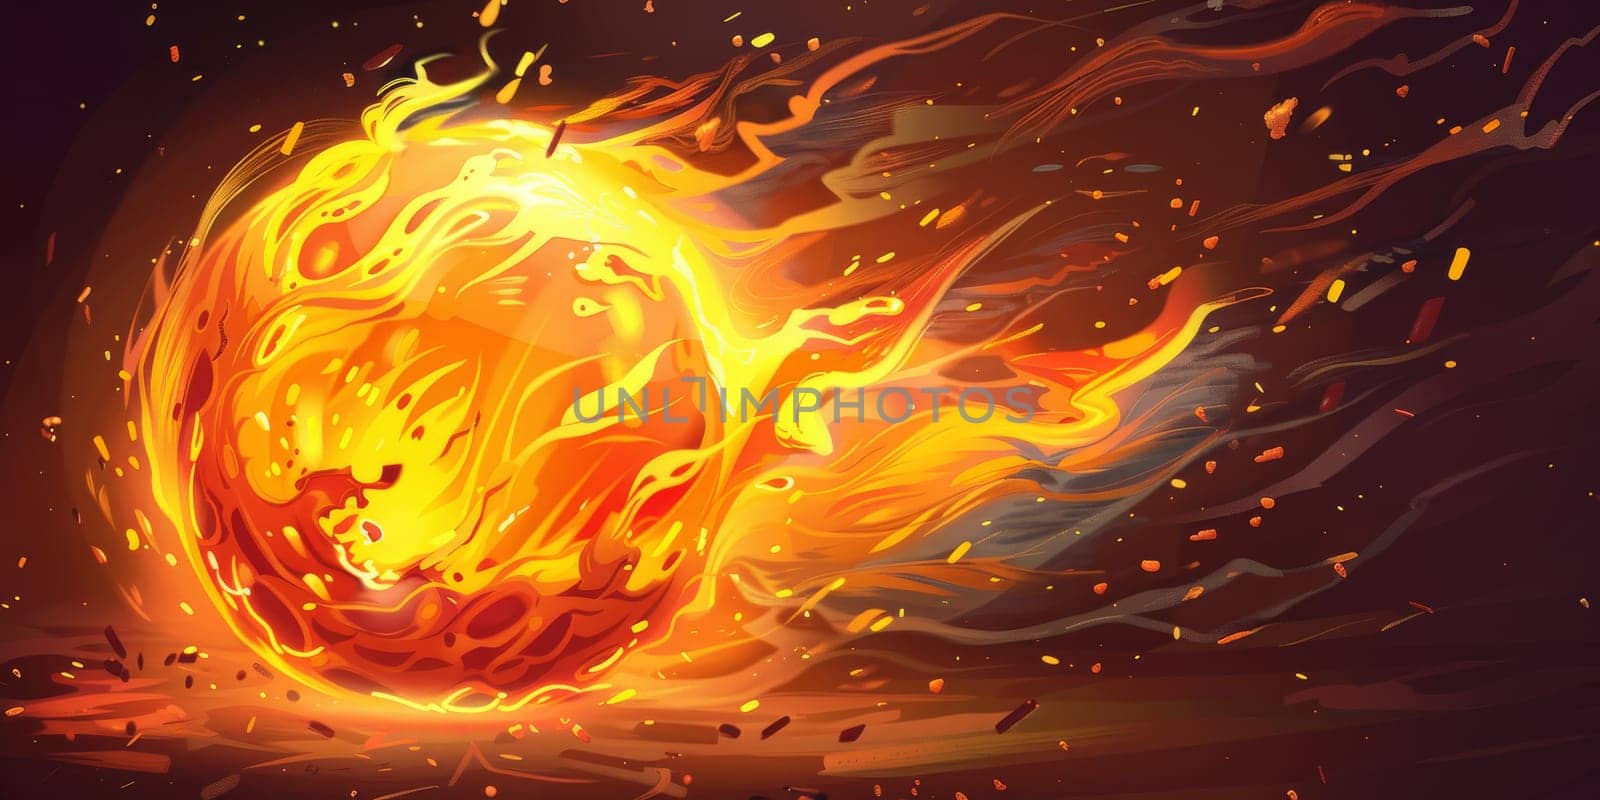 Fiery ball shining brightly in darkness by Kadula